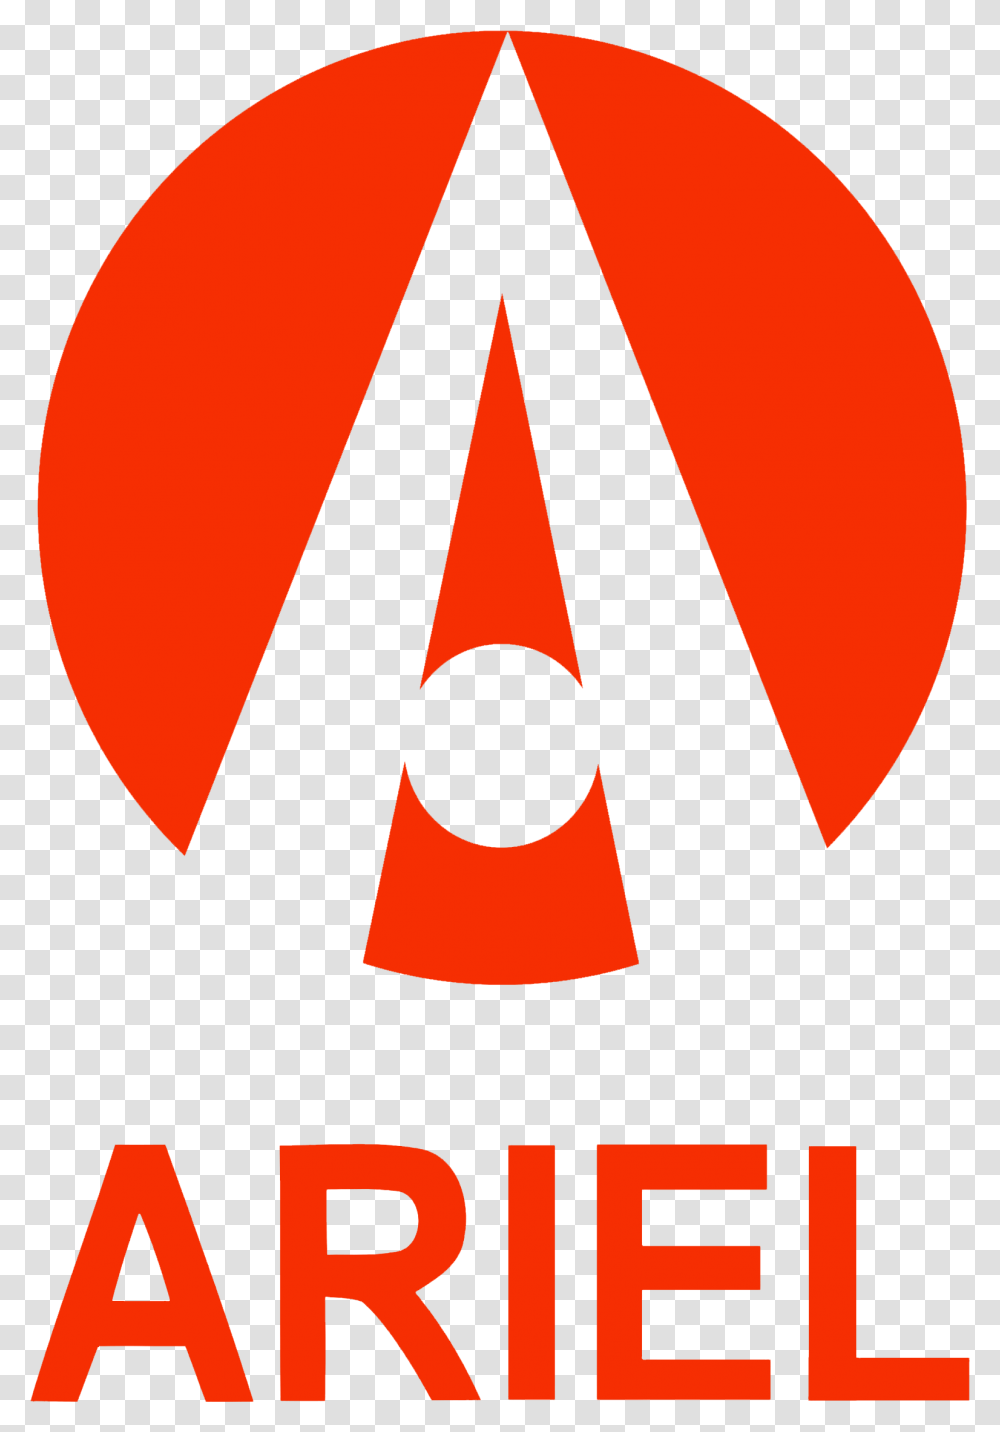 Ariel Logo Hd Information Ariel Atom, Symbol, Poster, Advertisement, Trademark Transparent Png